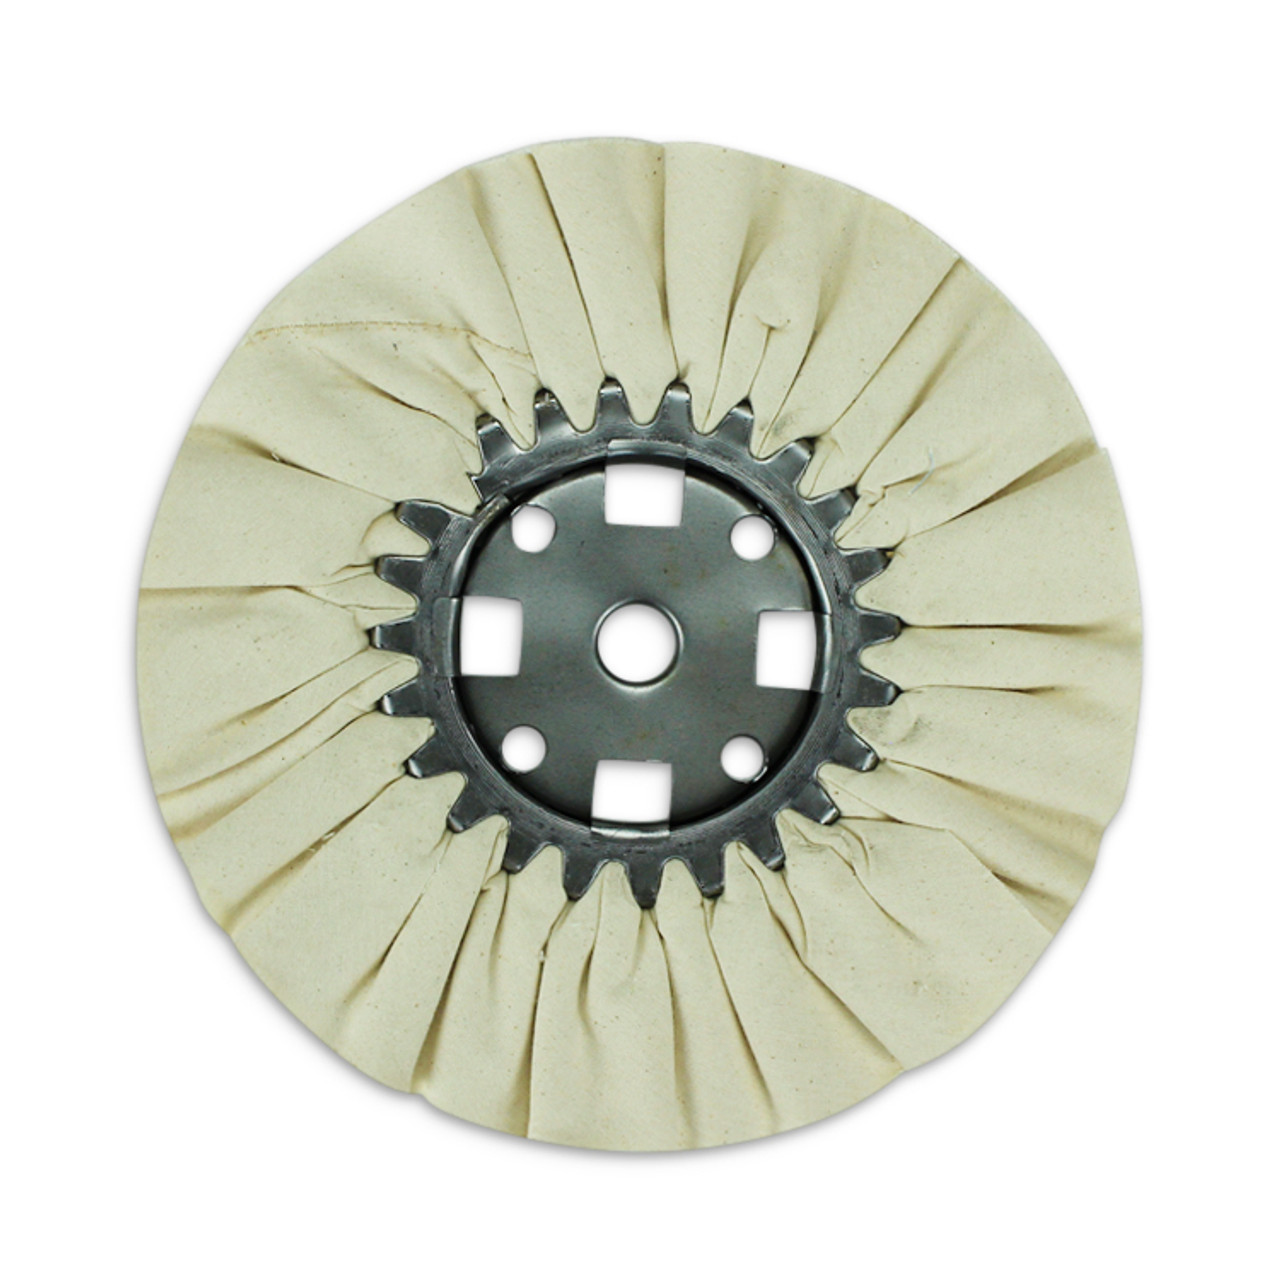 8 Pcs 8 Airway Buffing Wheel Aluminum Wheel Polishing Kit In Diameter 5/8  Inch A